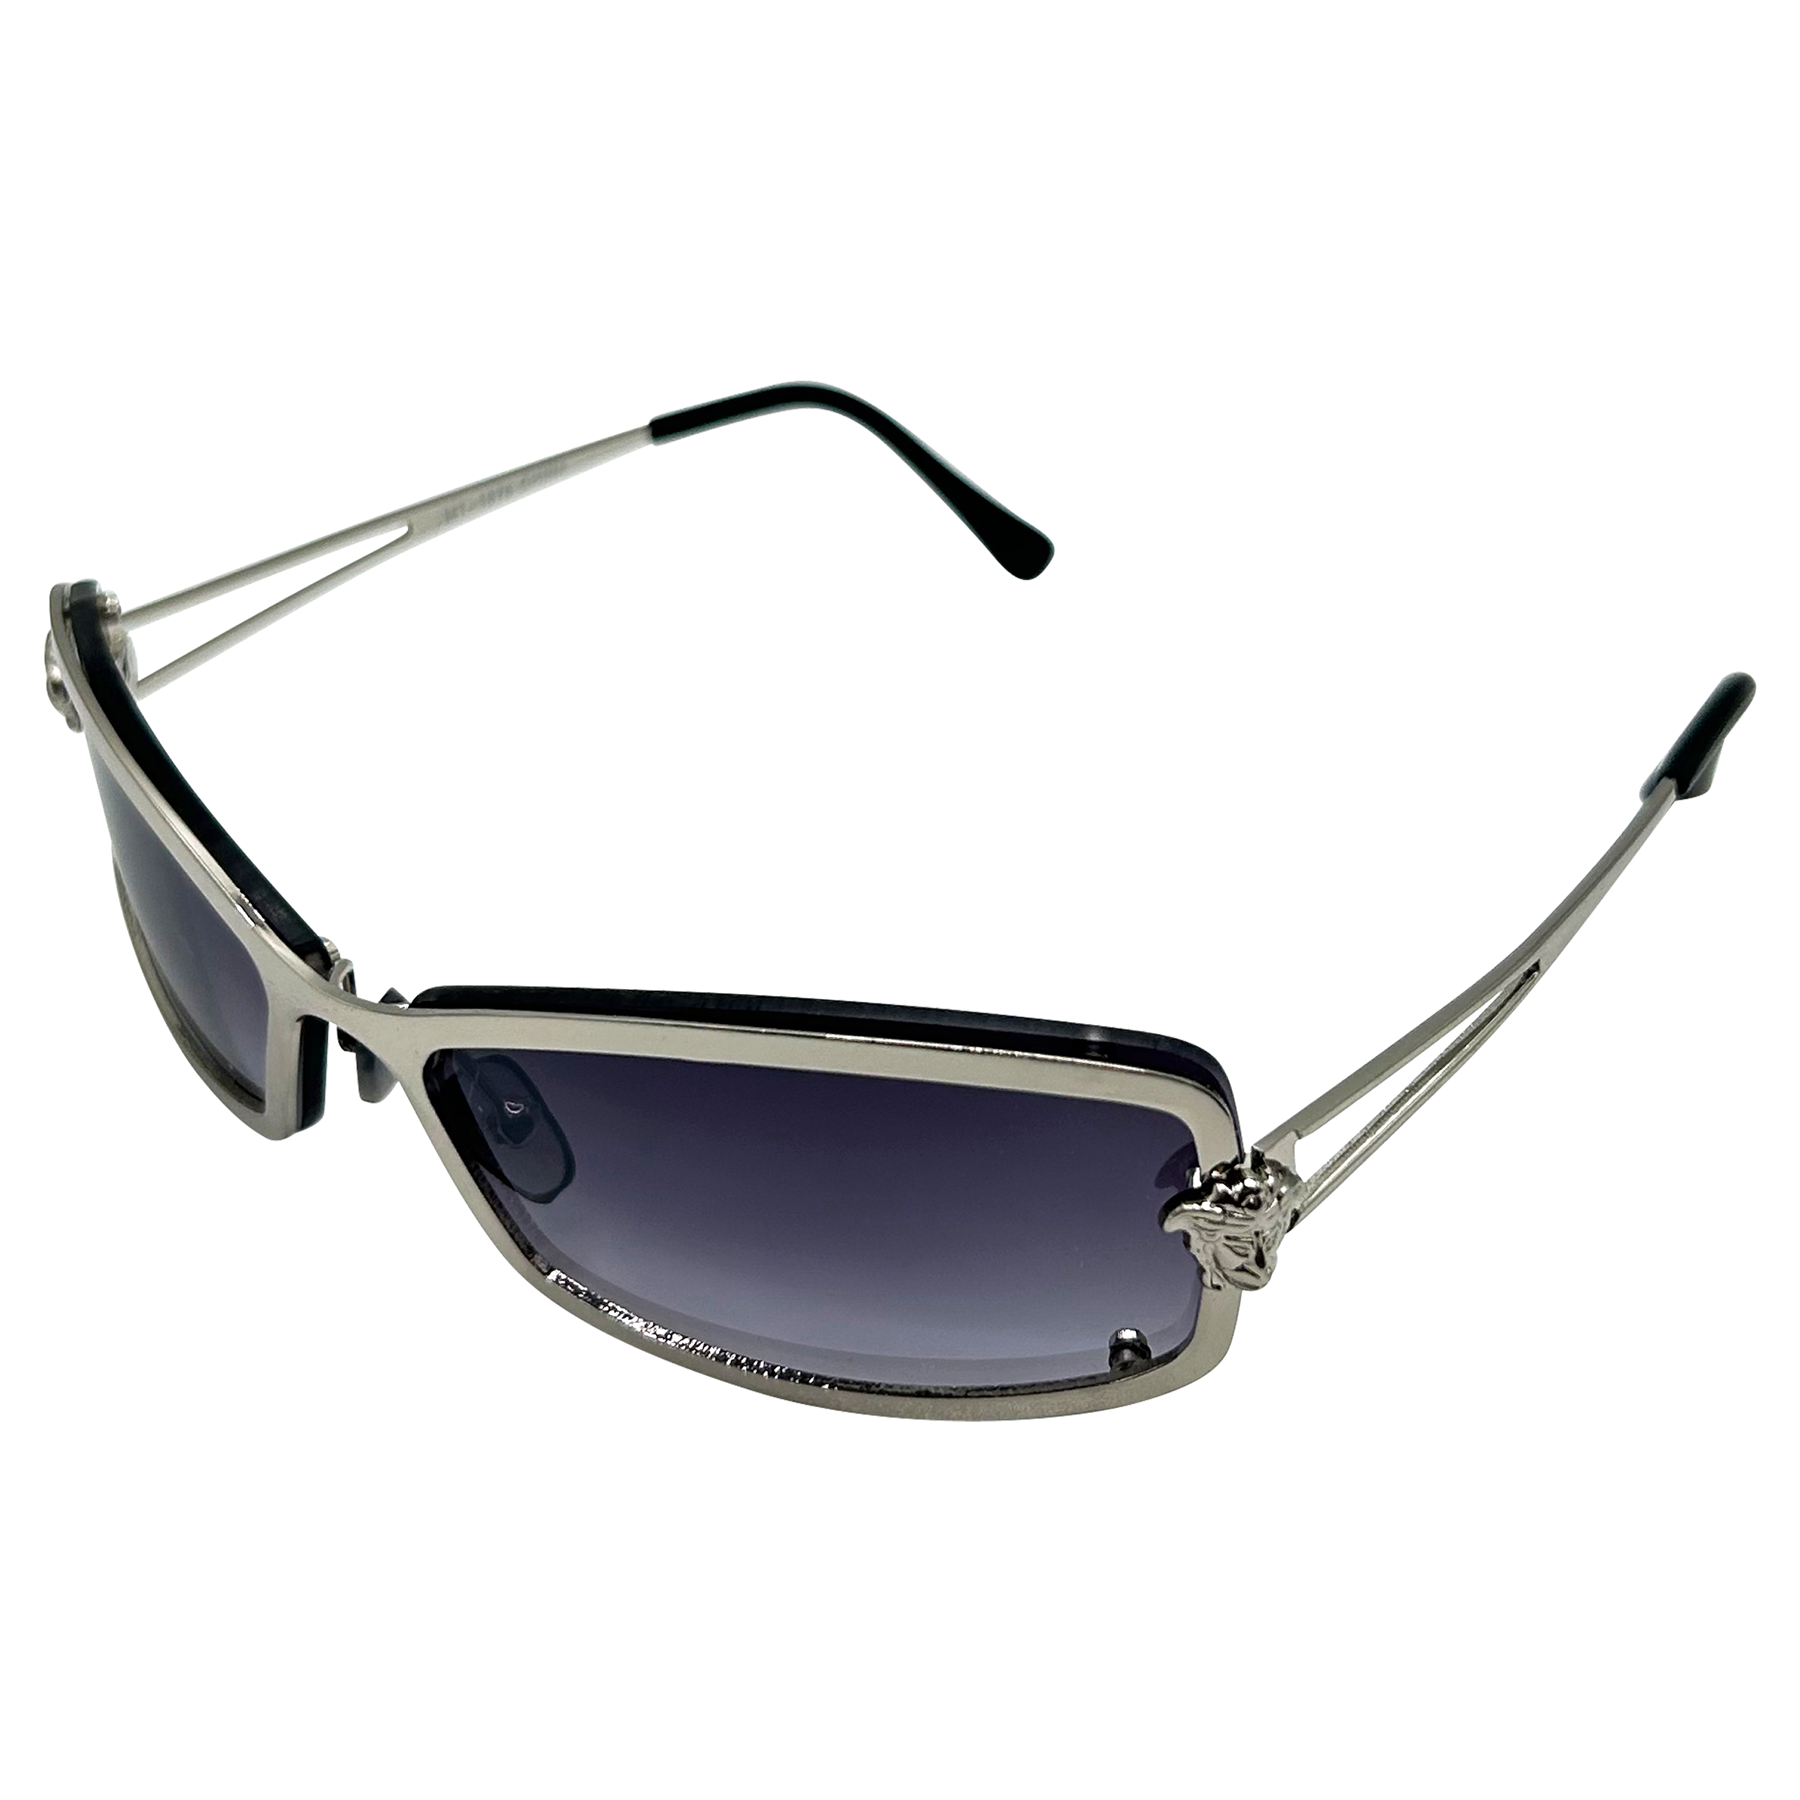 STRATASPHERE Square 90s Sunglasses